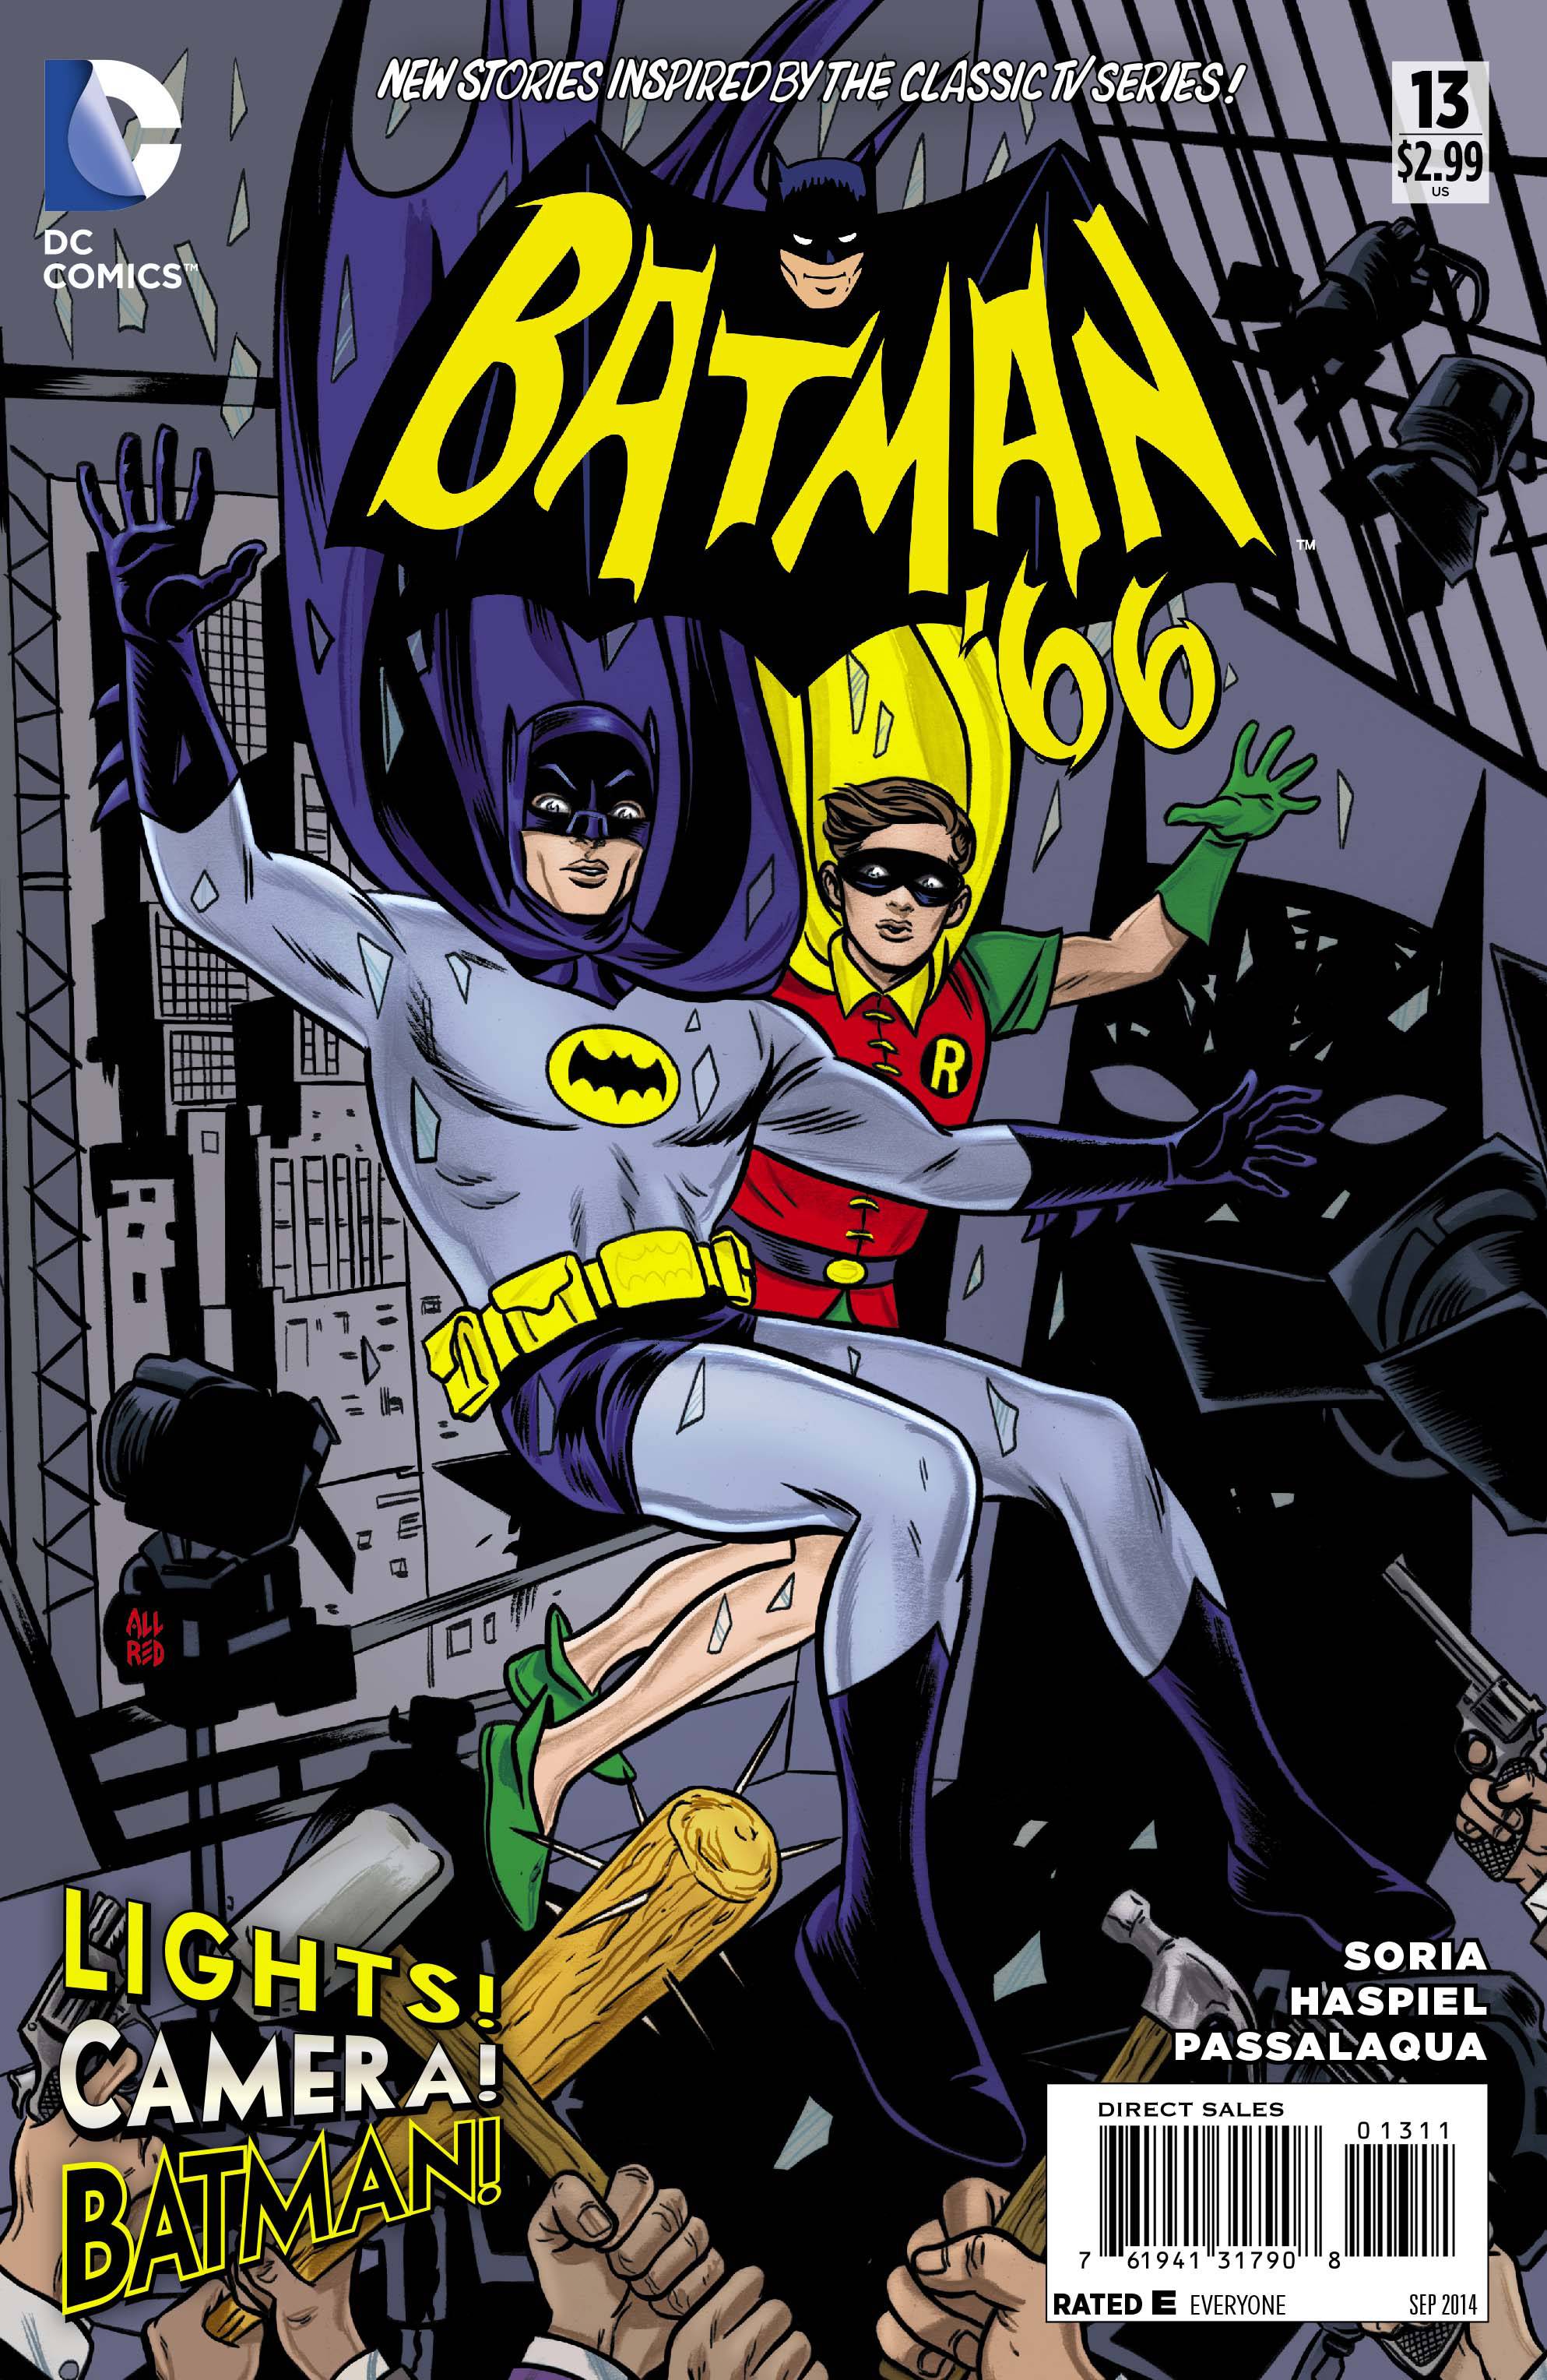 Batman 66 #13